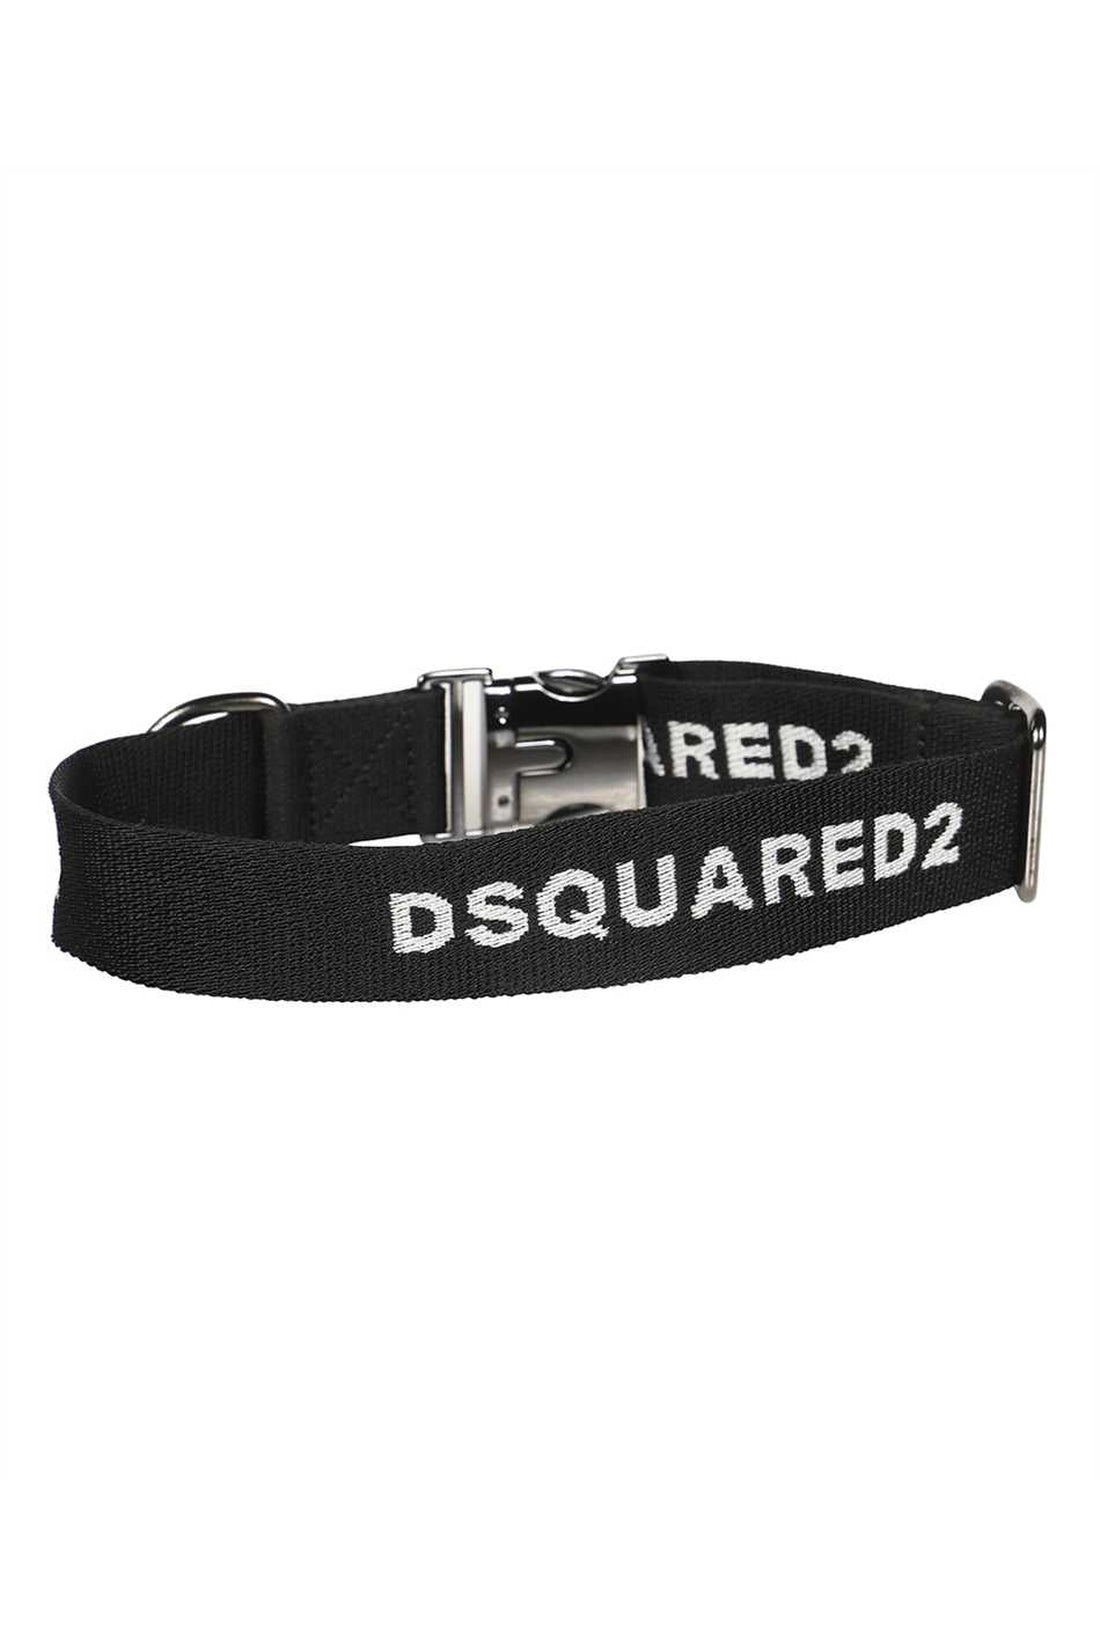 Dsquared2-OUTLET-SALE-Poldo x D2 - Montreal Dog collar-ARCHIVIST